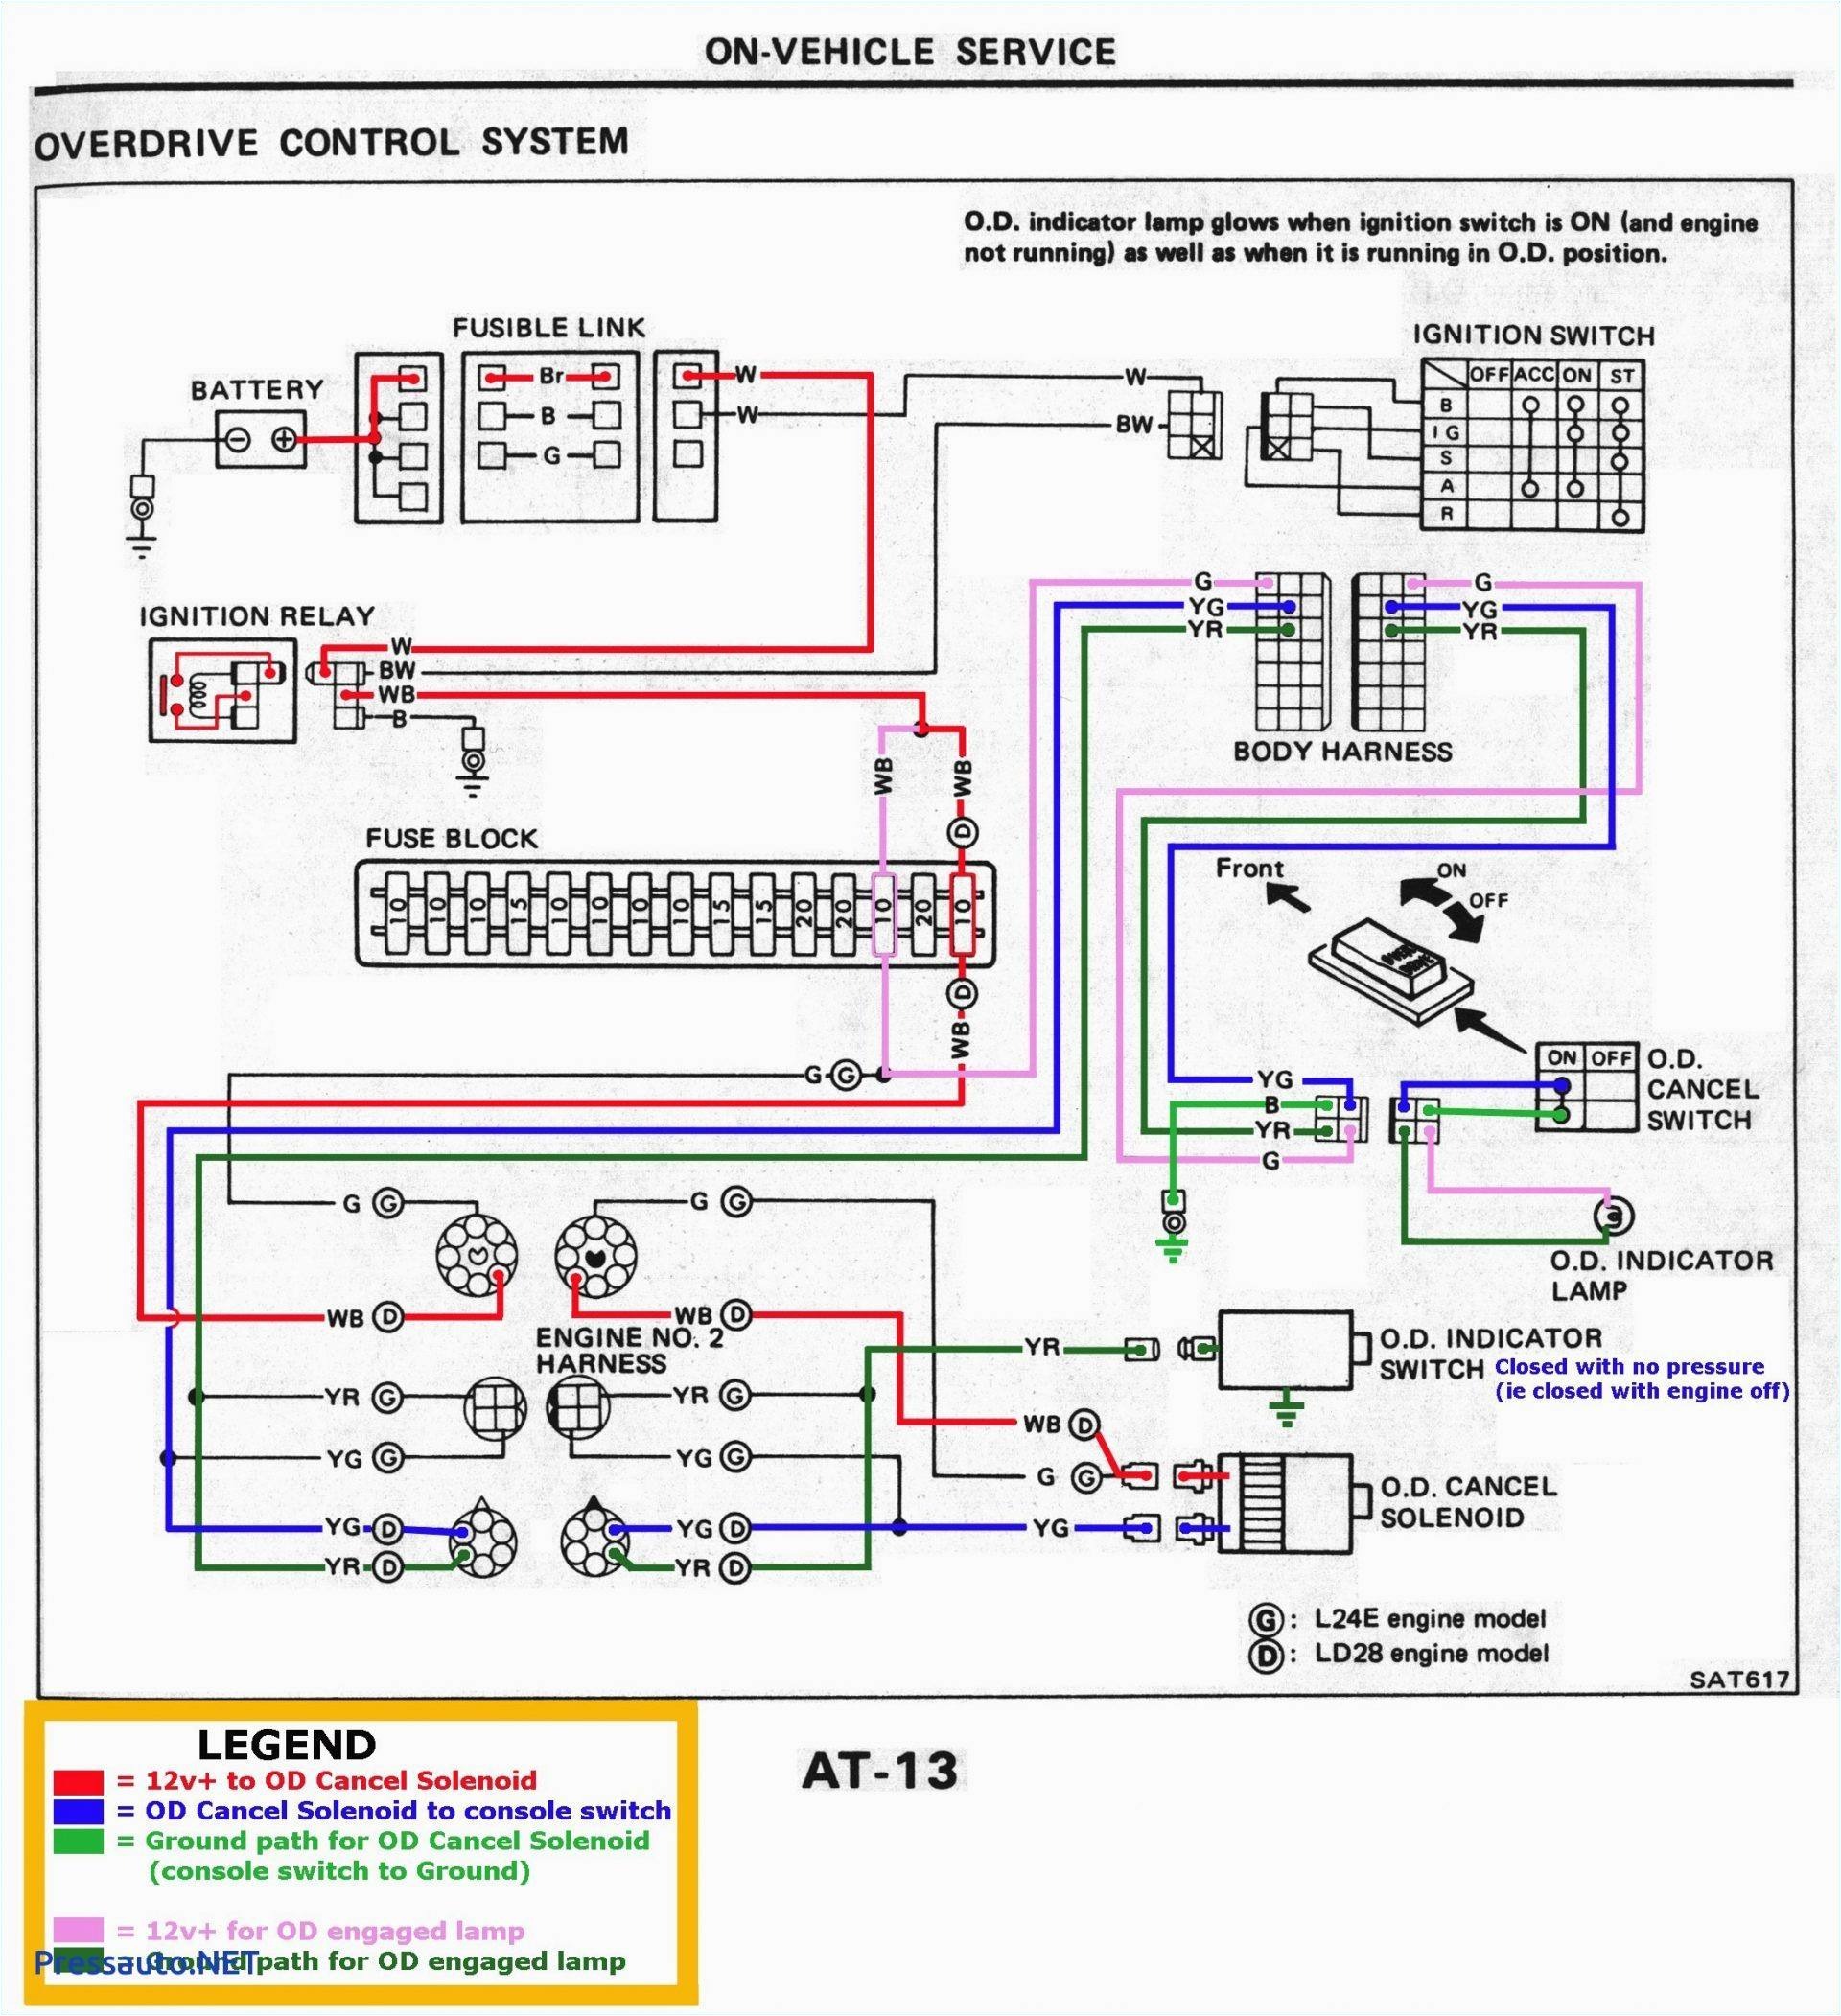 2008 chevy silverado wiring diagram fresh 2008 chevy silverado wiring diagram detailed wiring diagrams jpg